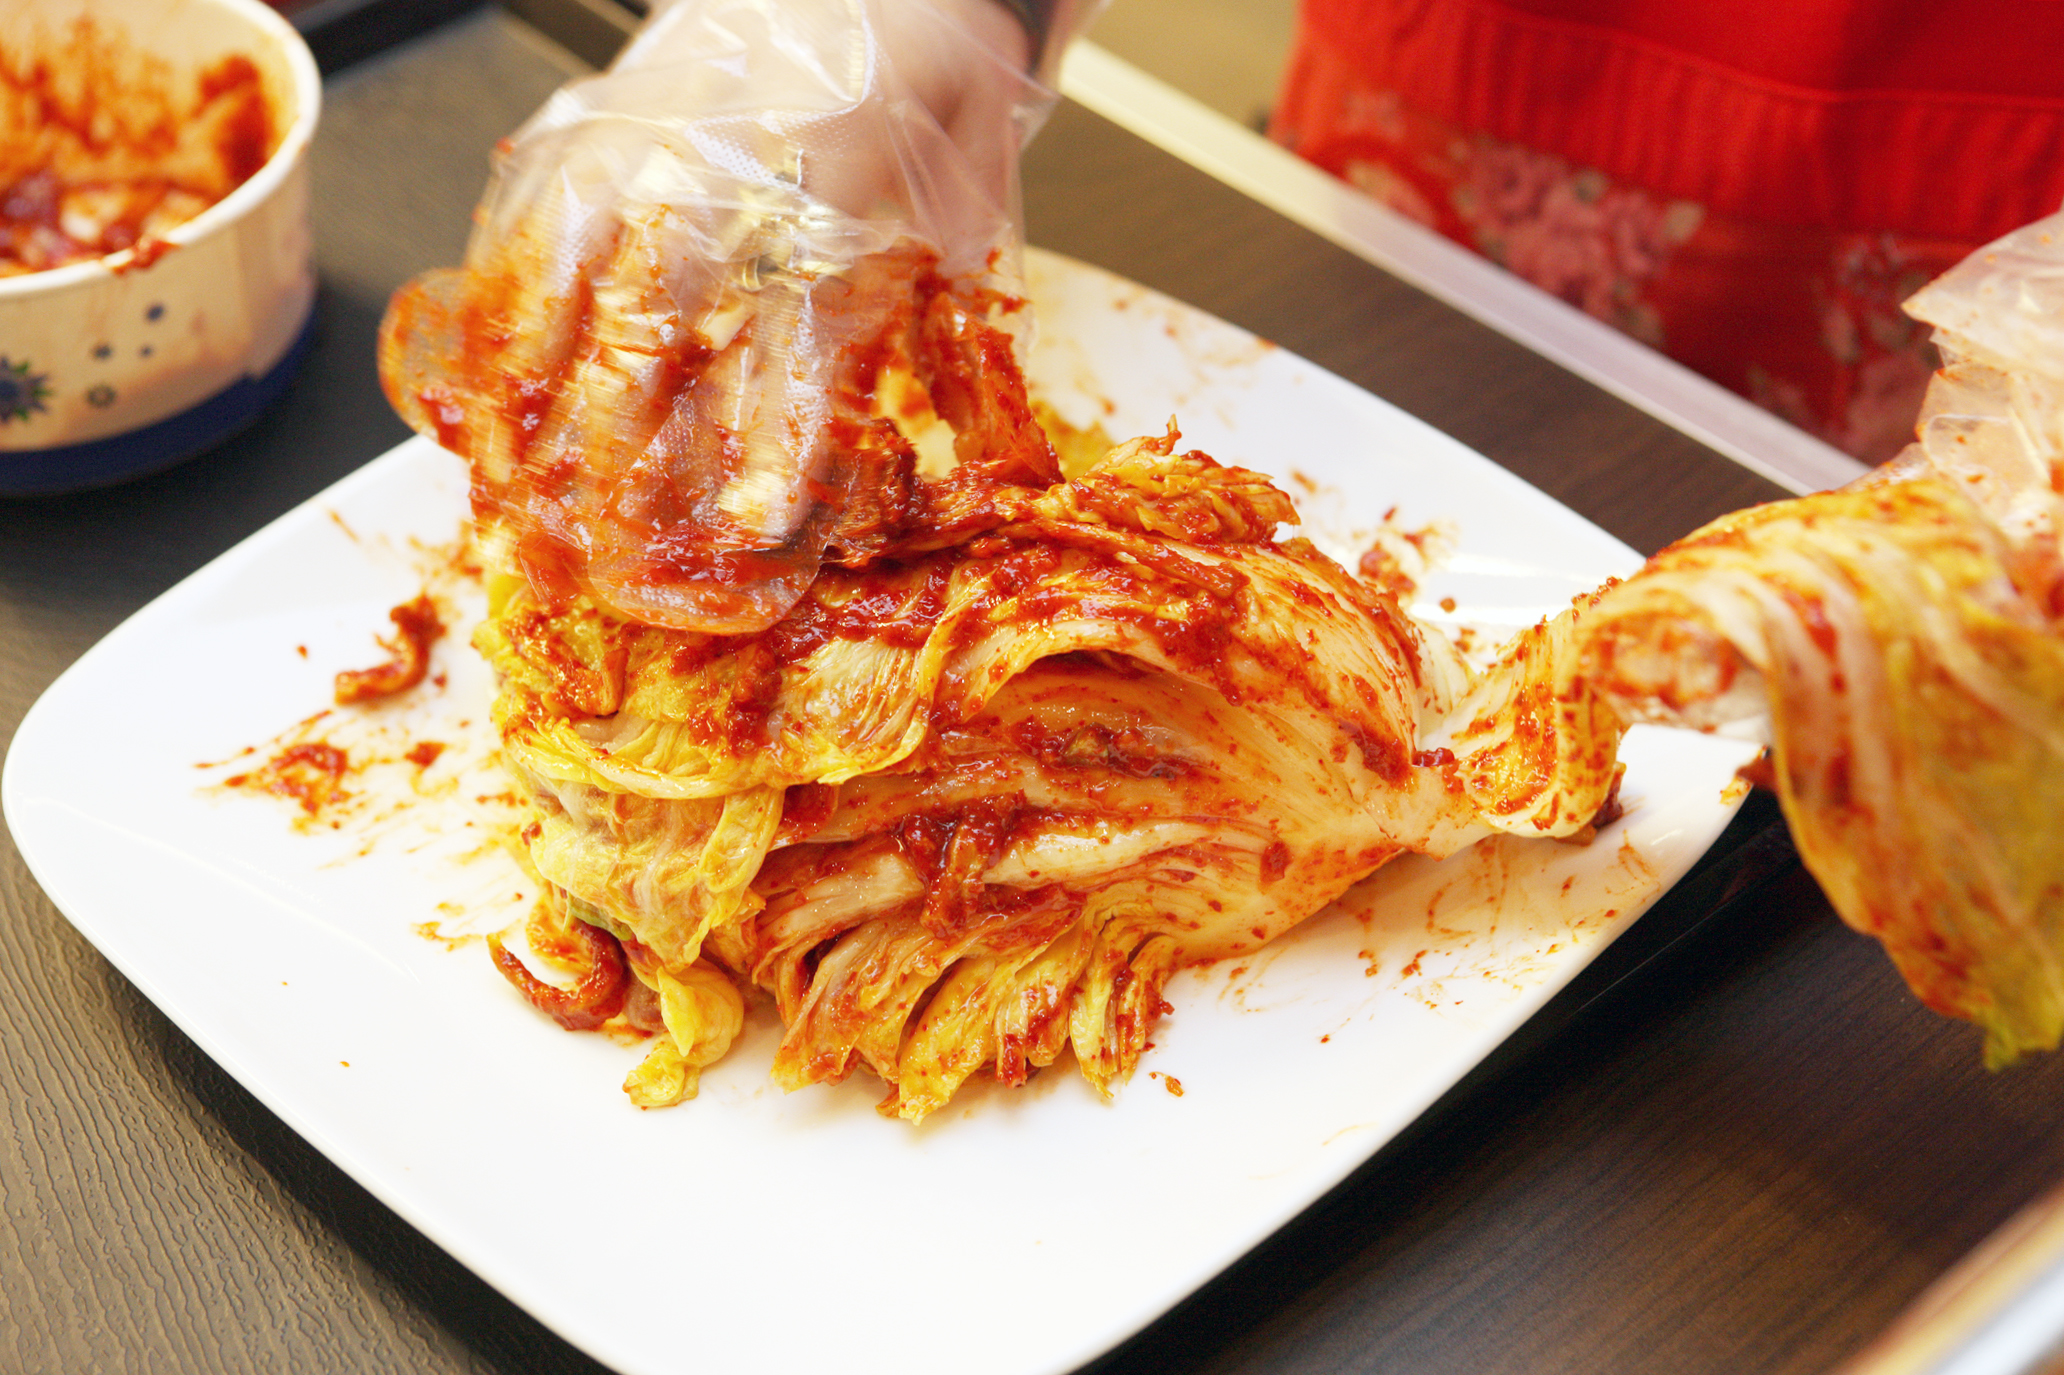 Kimchi Making Experience